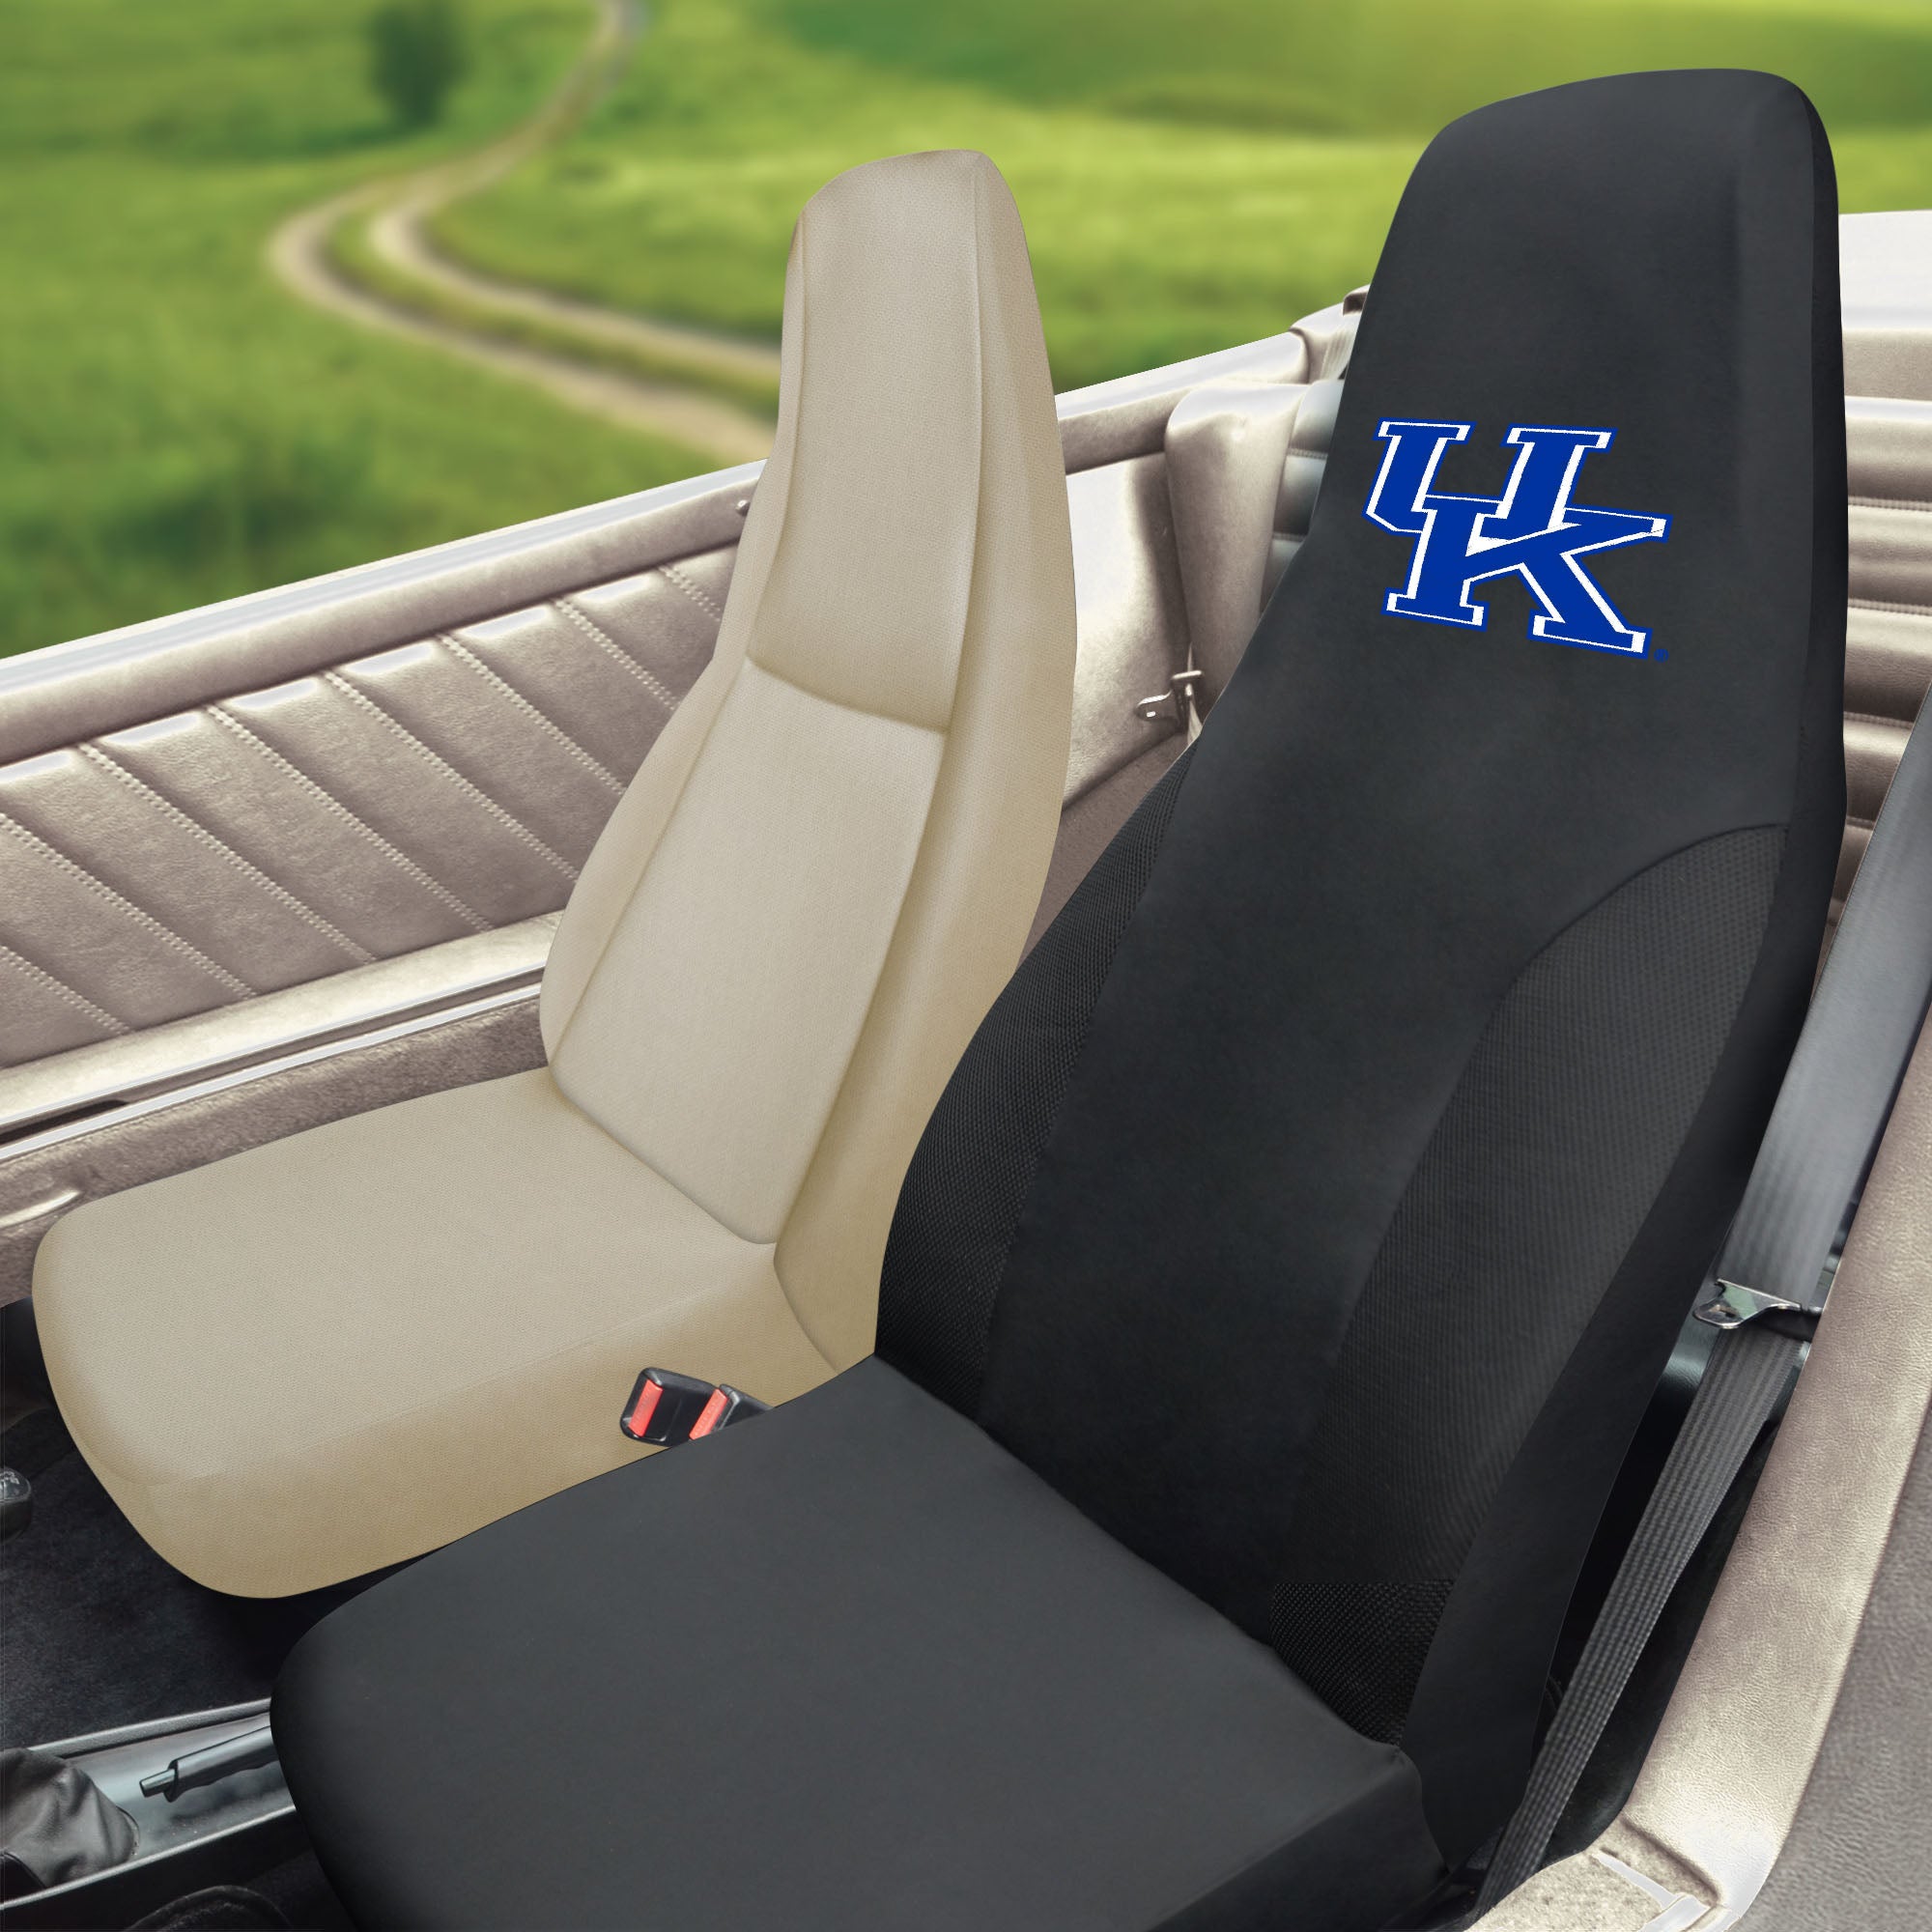 University of Kentucky Set of 2 Car Seat Covers